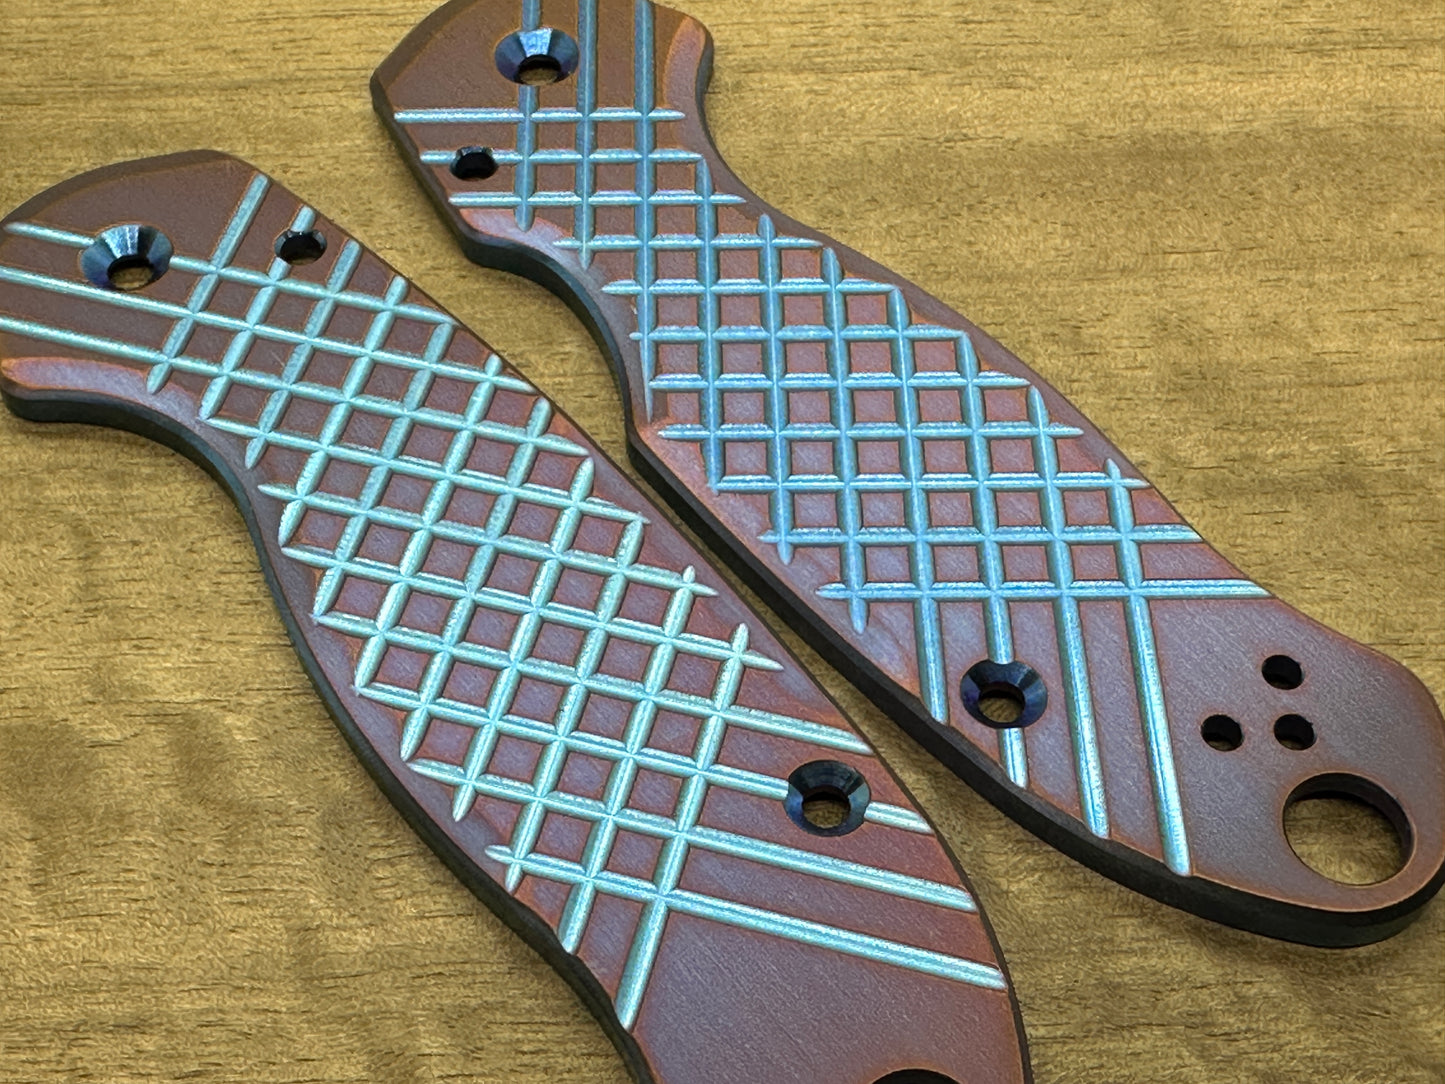 2-Tone (Blue-Purple) FRAG milled Titanium scales for Spyderco Para 3